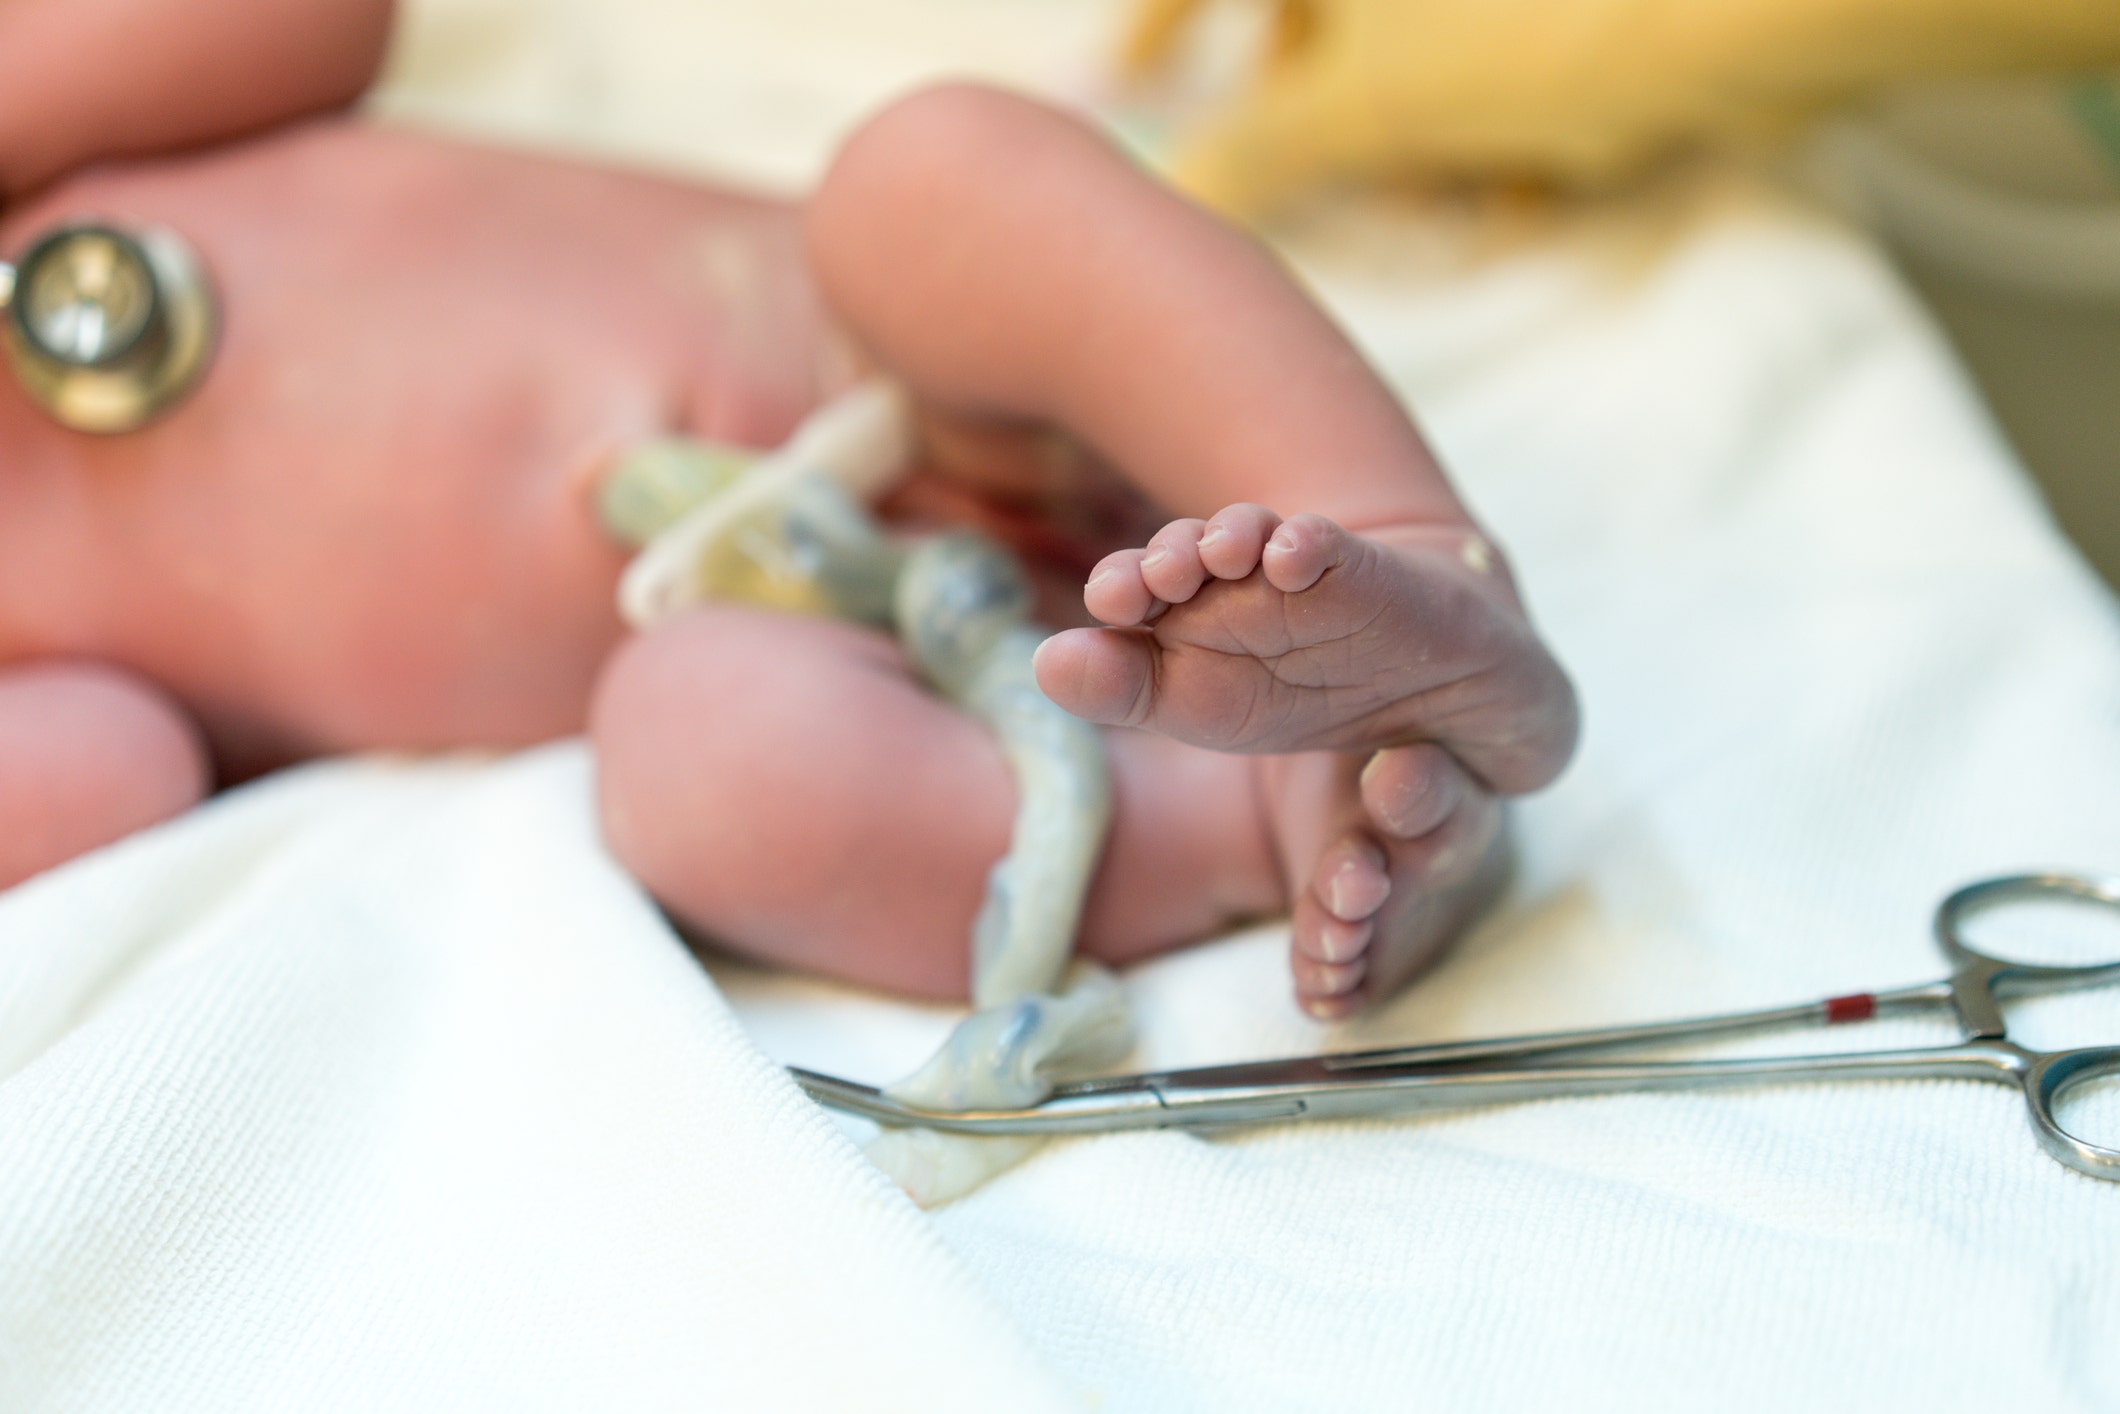 Delay in clamping umbilical cord benefits babies, U.S. doctors say